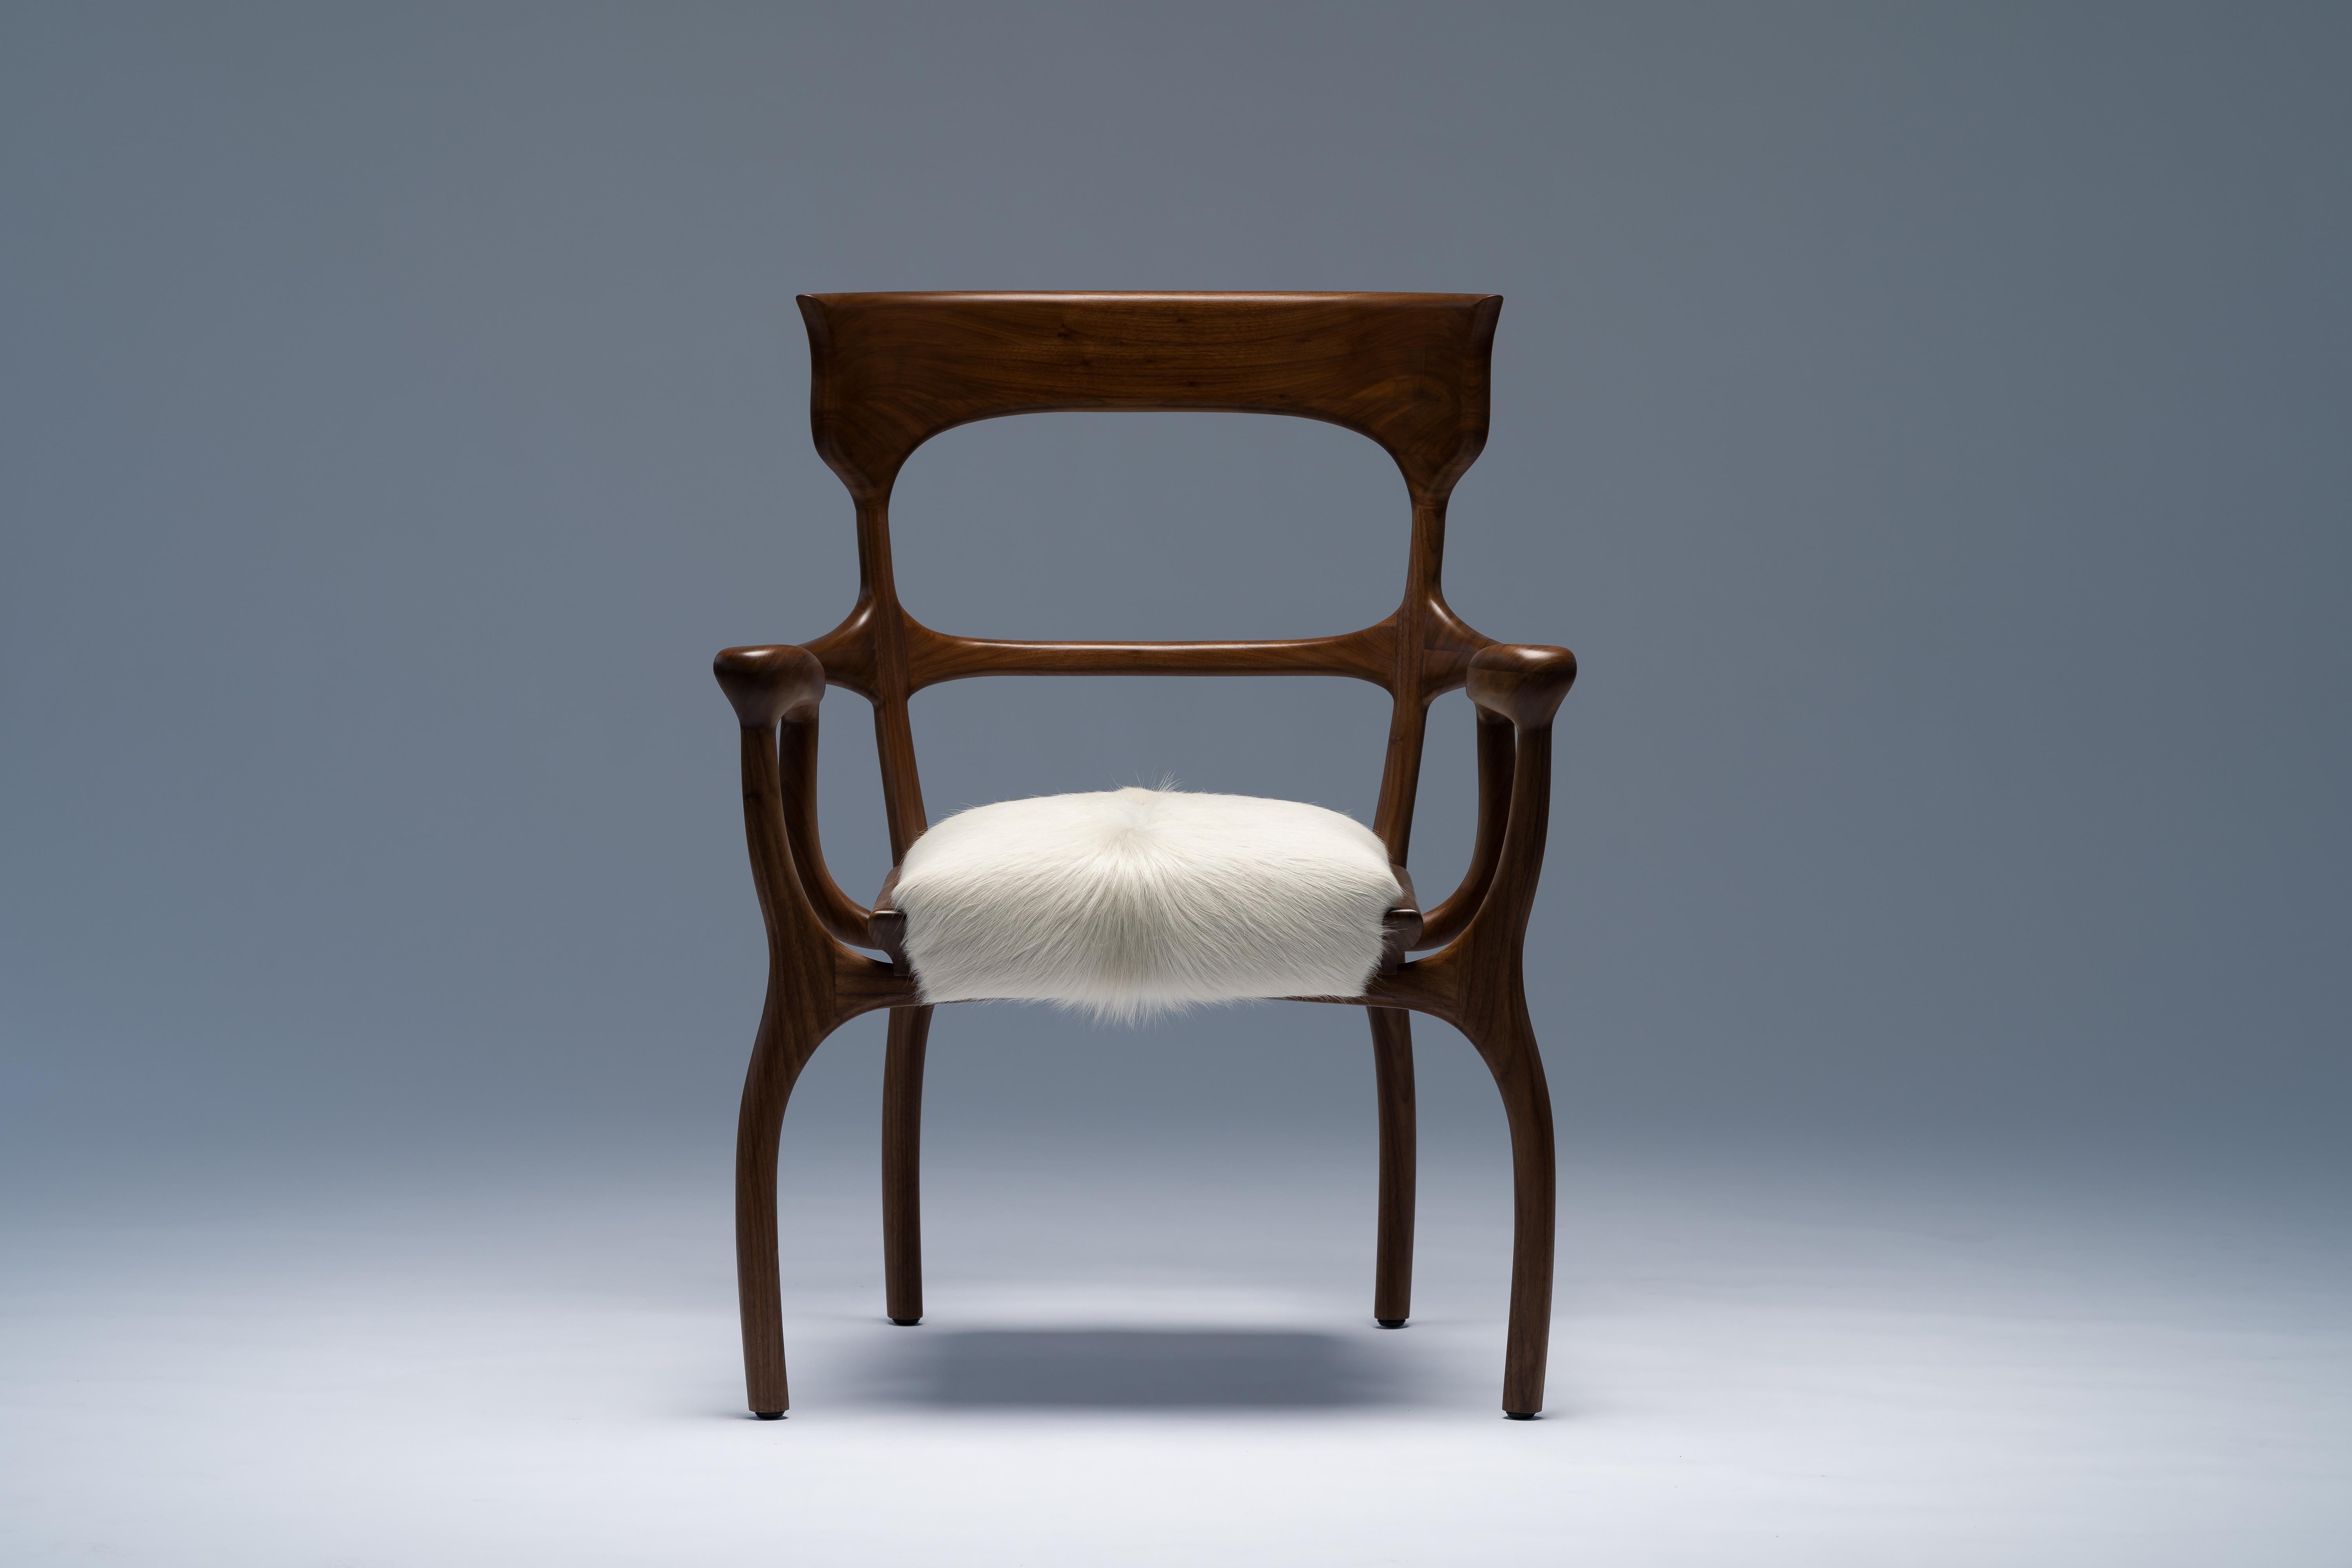 MARTA chair by Mandy Graham 

MARTA
M01, chair armchair
American walnut or sandblasted white oak, hairy cowhide seat
Measures: 27